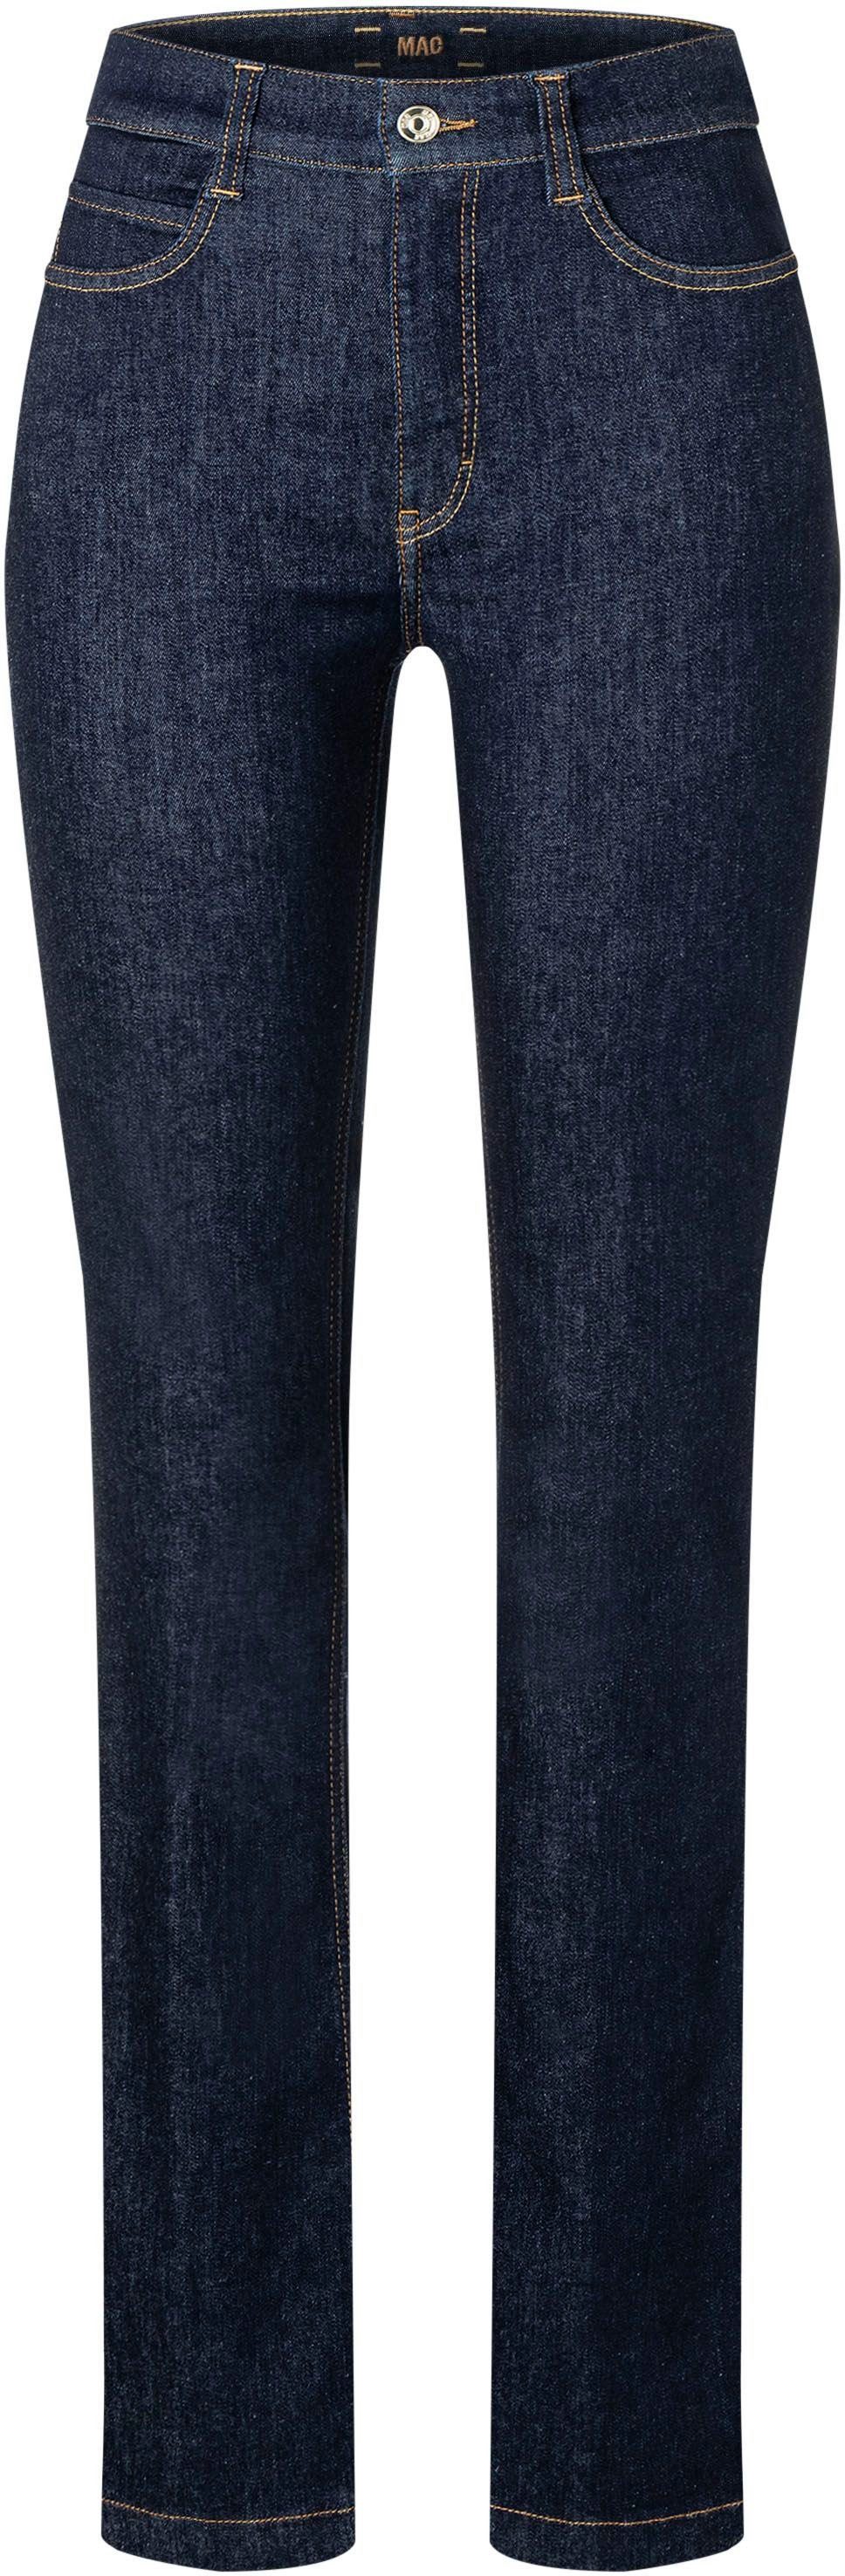 BOOT fashion High-waist-Jeans rinsed MAC